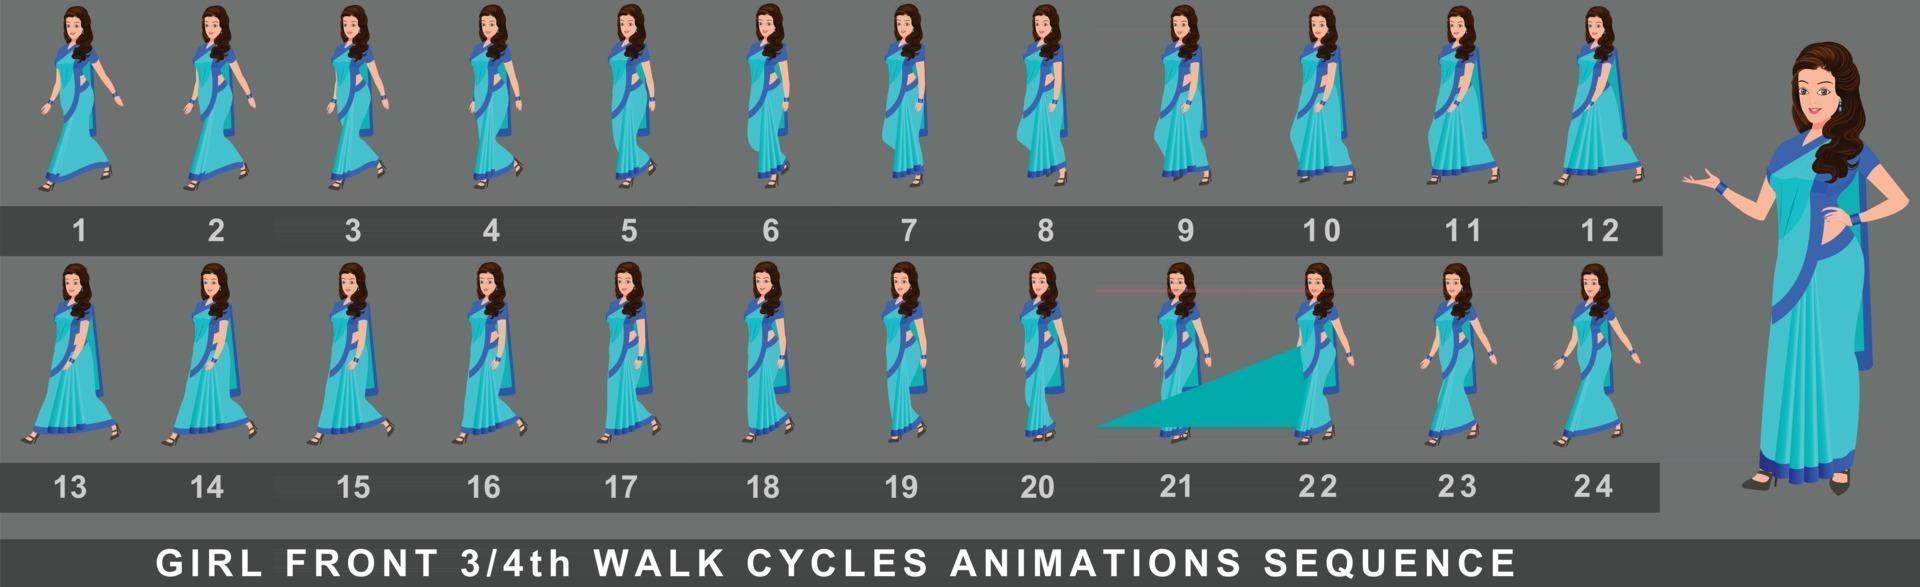 Mädchen Charakter Walk Cycle Animationssequenz vektor